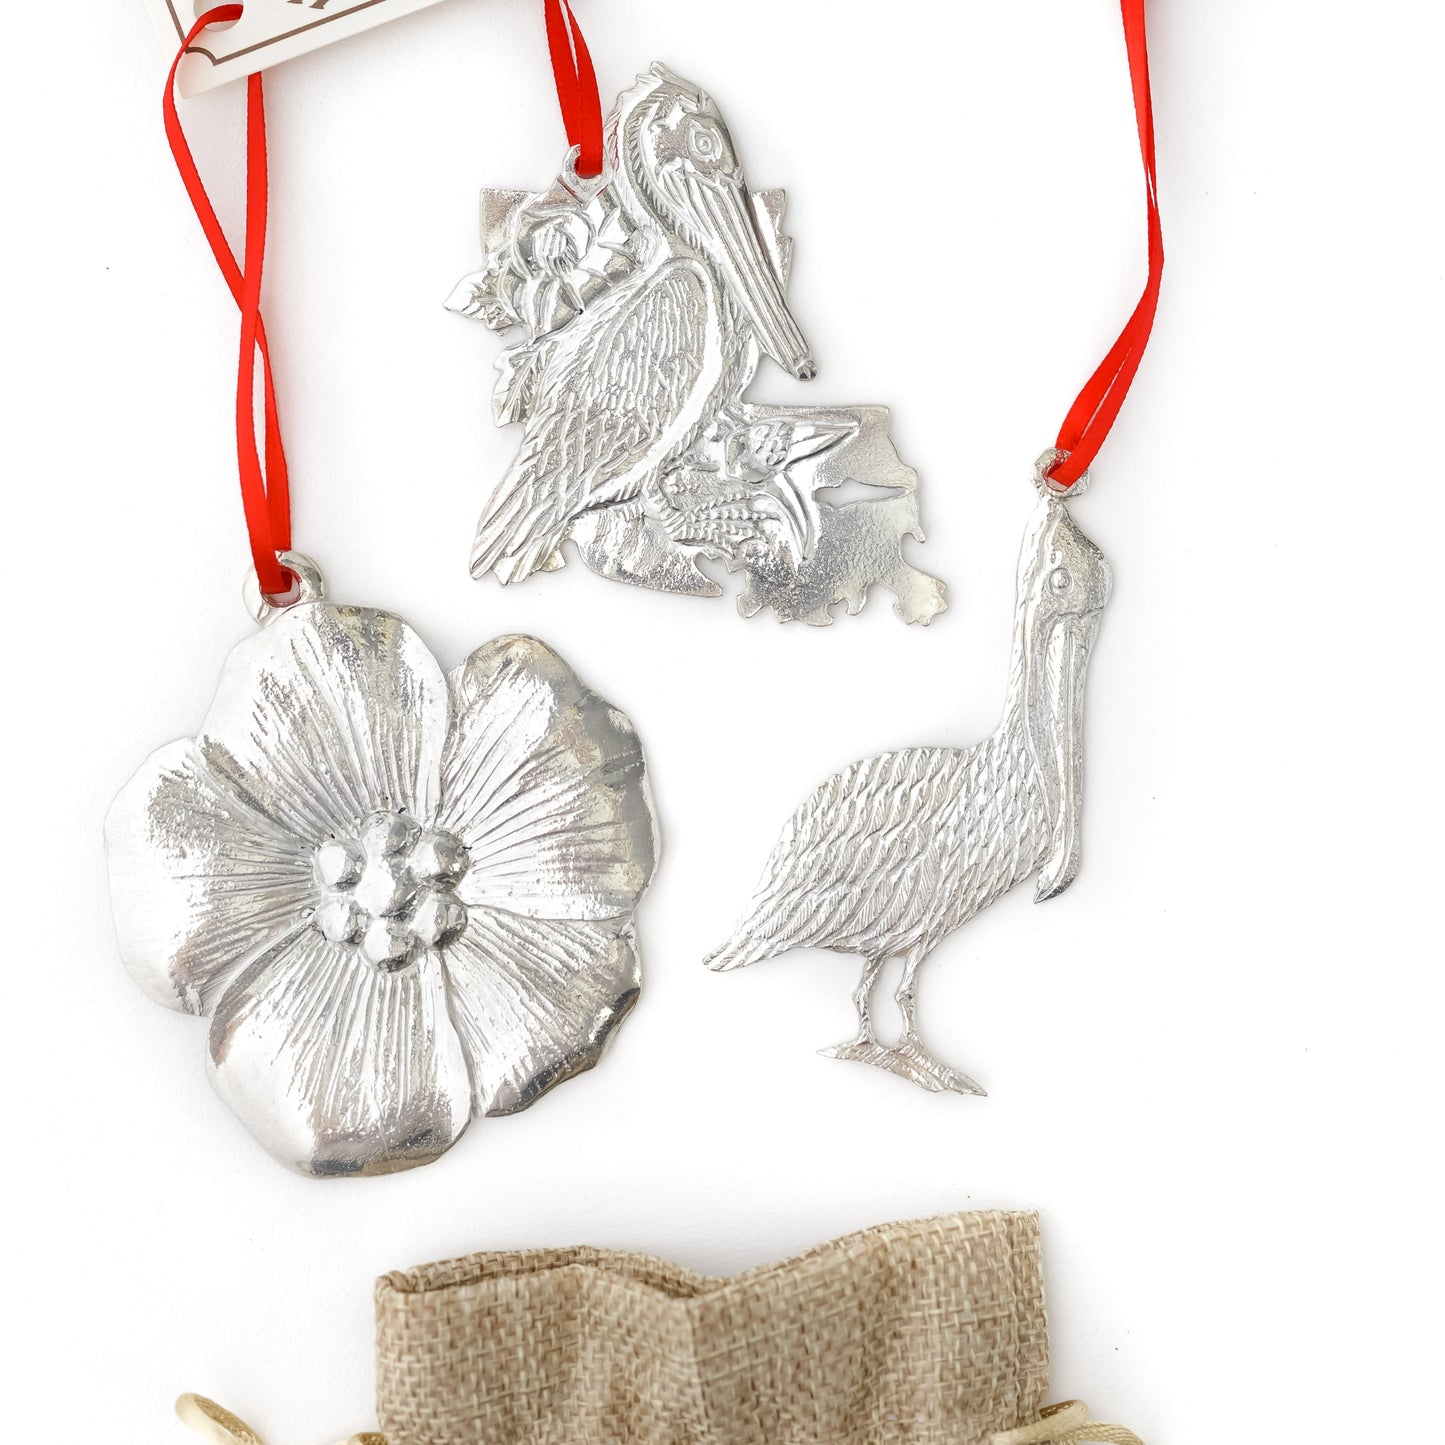 Louisiana Christmas Ornament - LO State Symbols - Alligator - Pelican - Magnolia - Individual Ornament or Gift Set